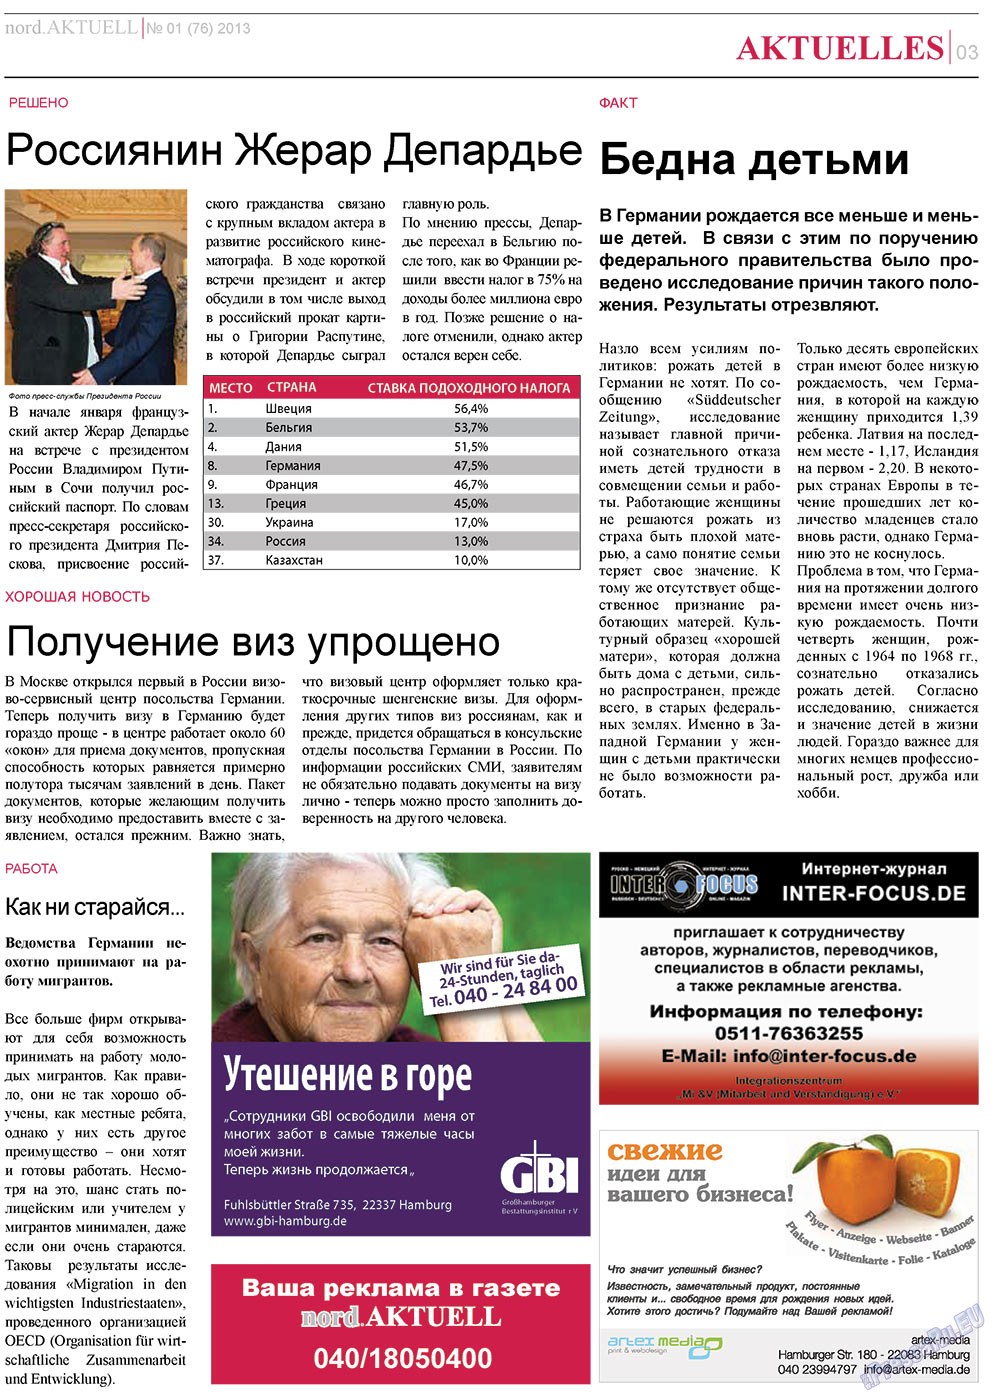 nord.Aktuell, газета. 2013 №1 стр.3